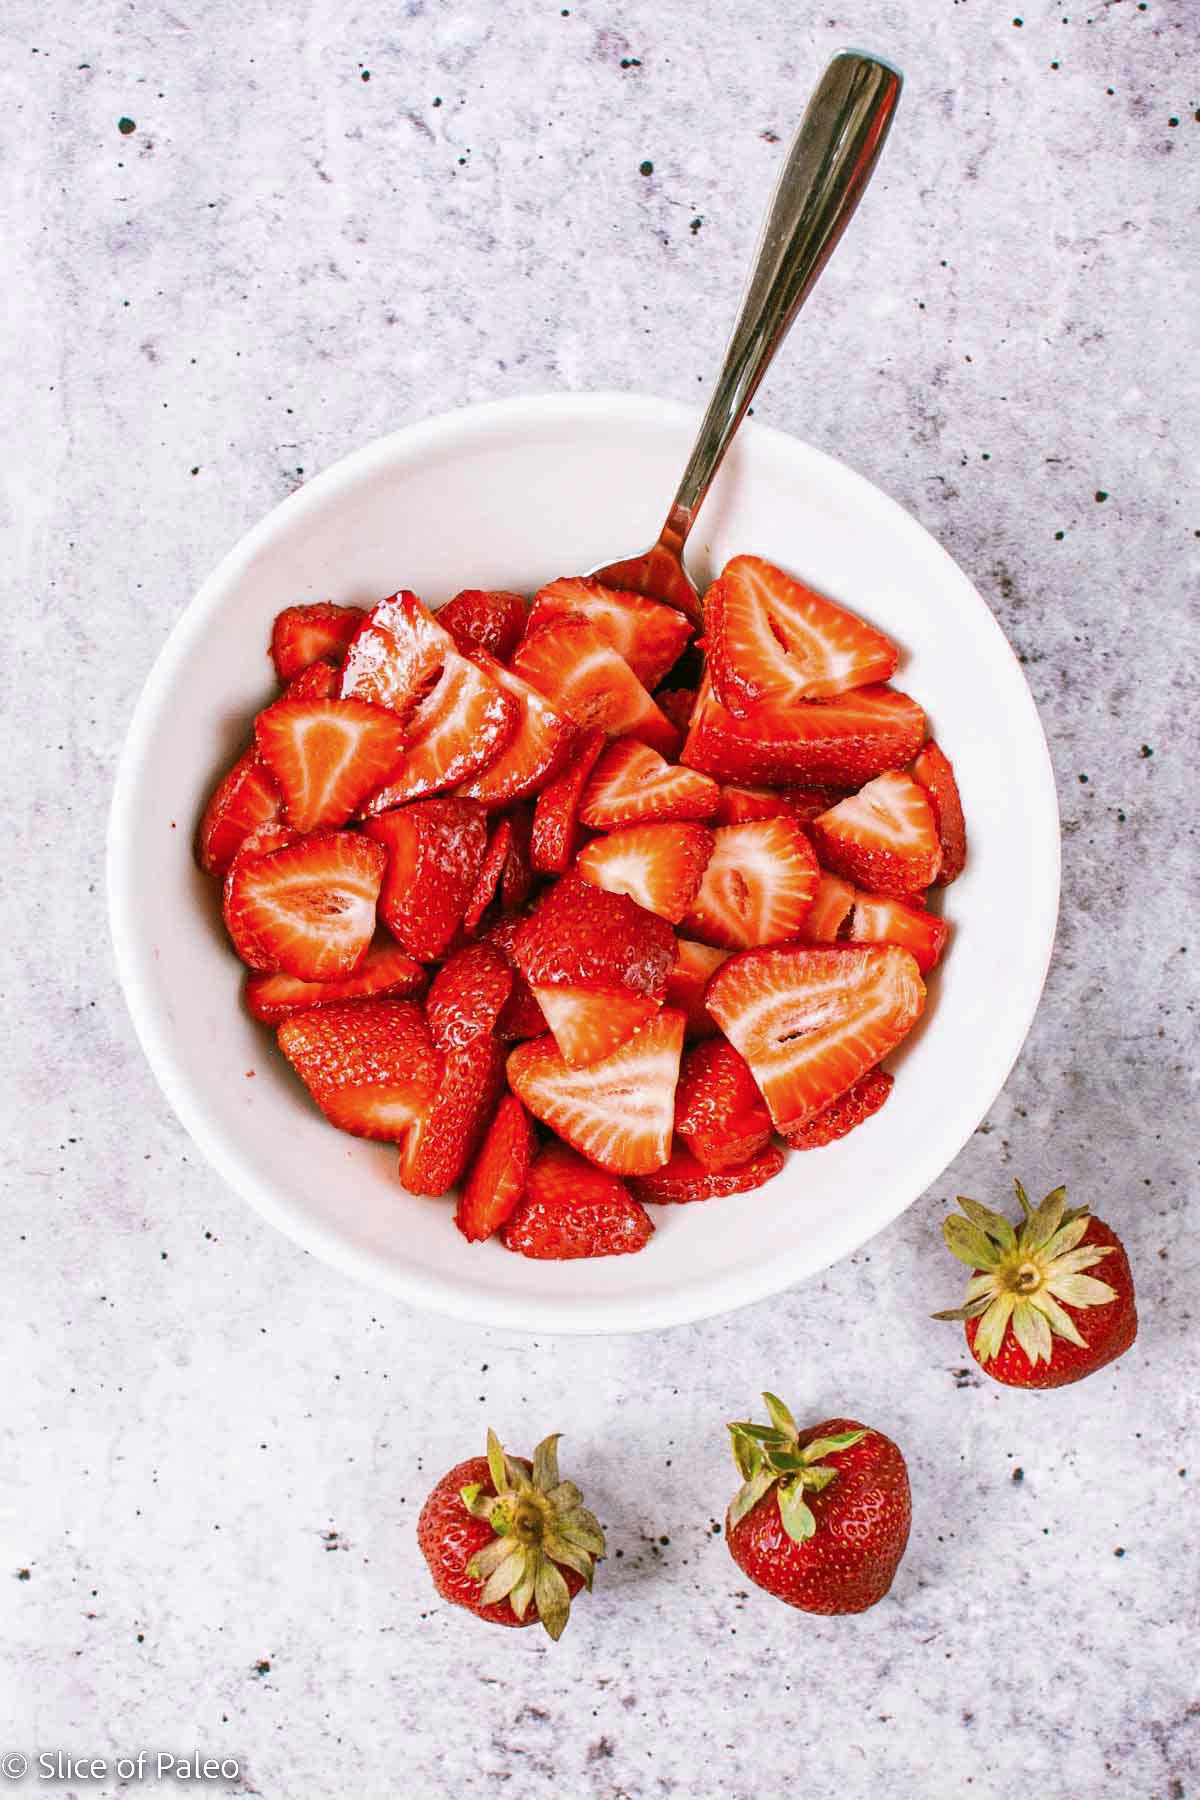 Paleo Strawberry Shortcake strawberries for topping